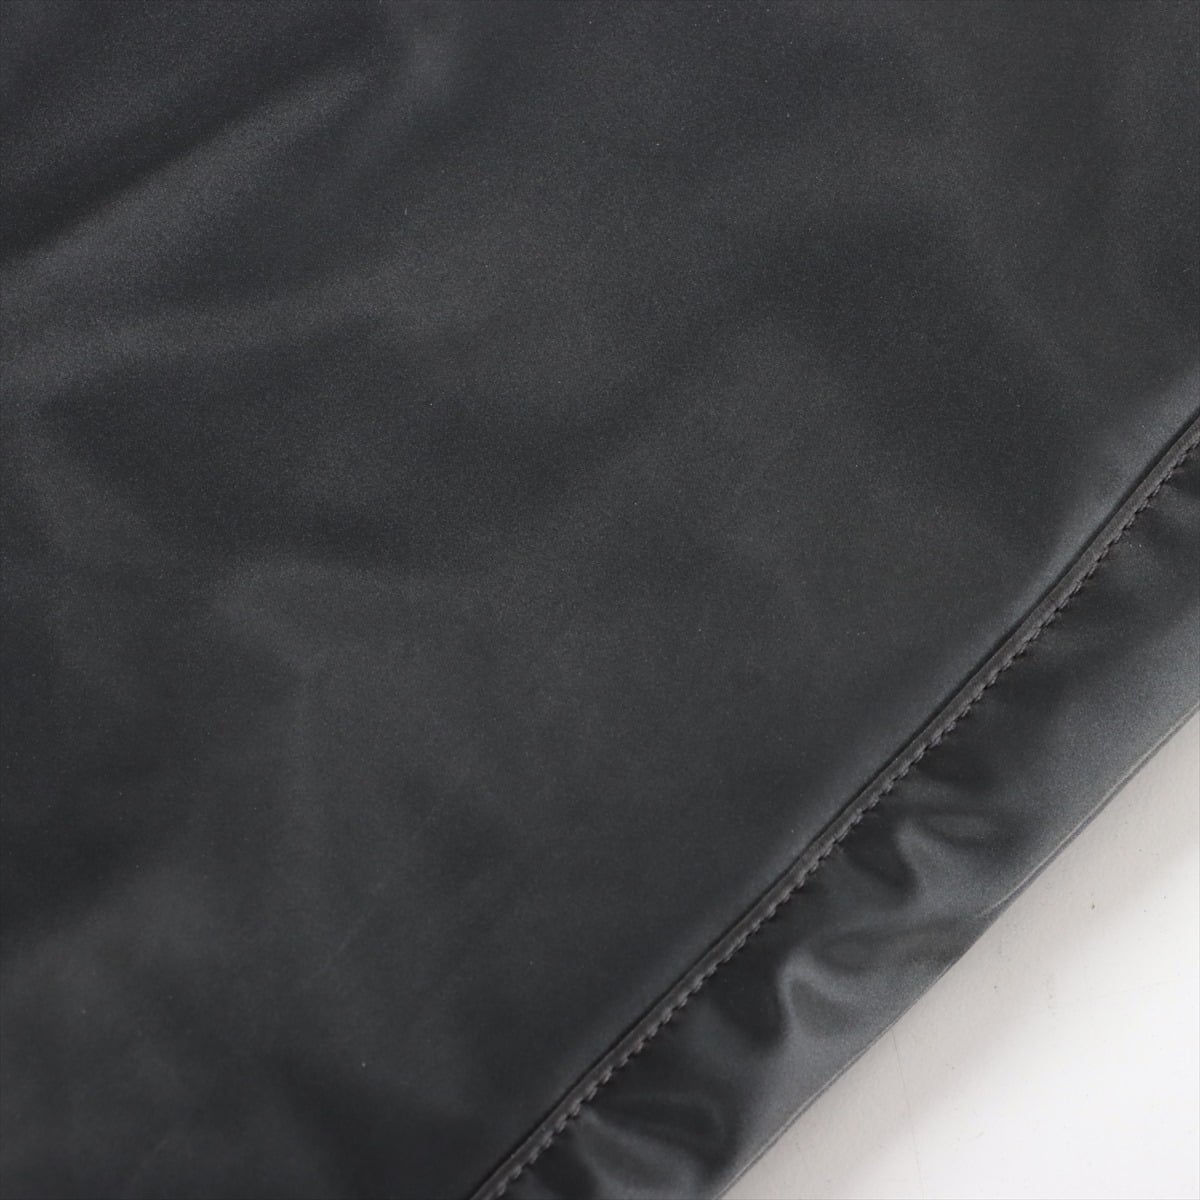 Hermès Polyester Pants 38 Ladies' Black  Sold goods Serie button